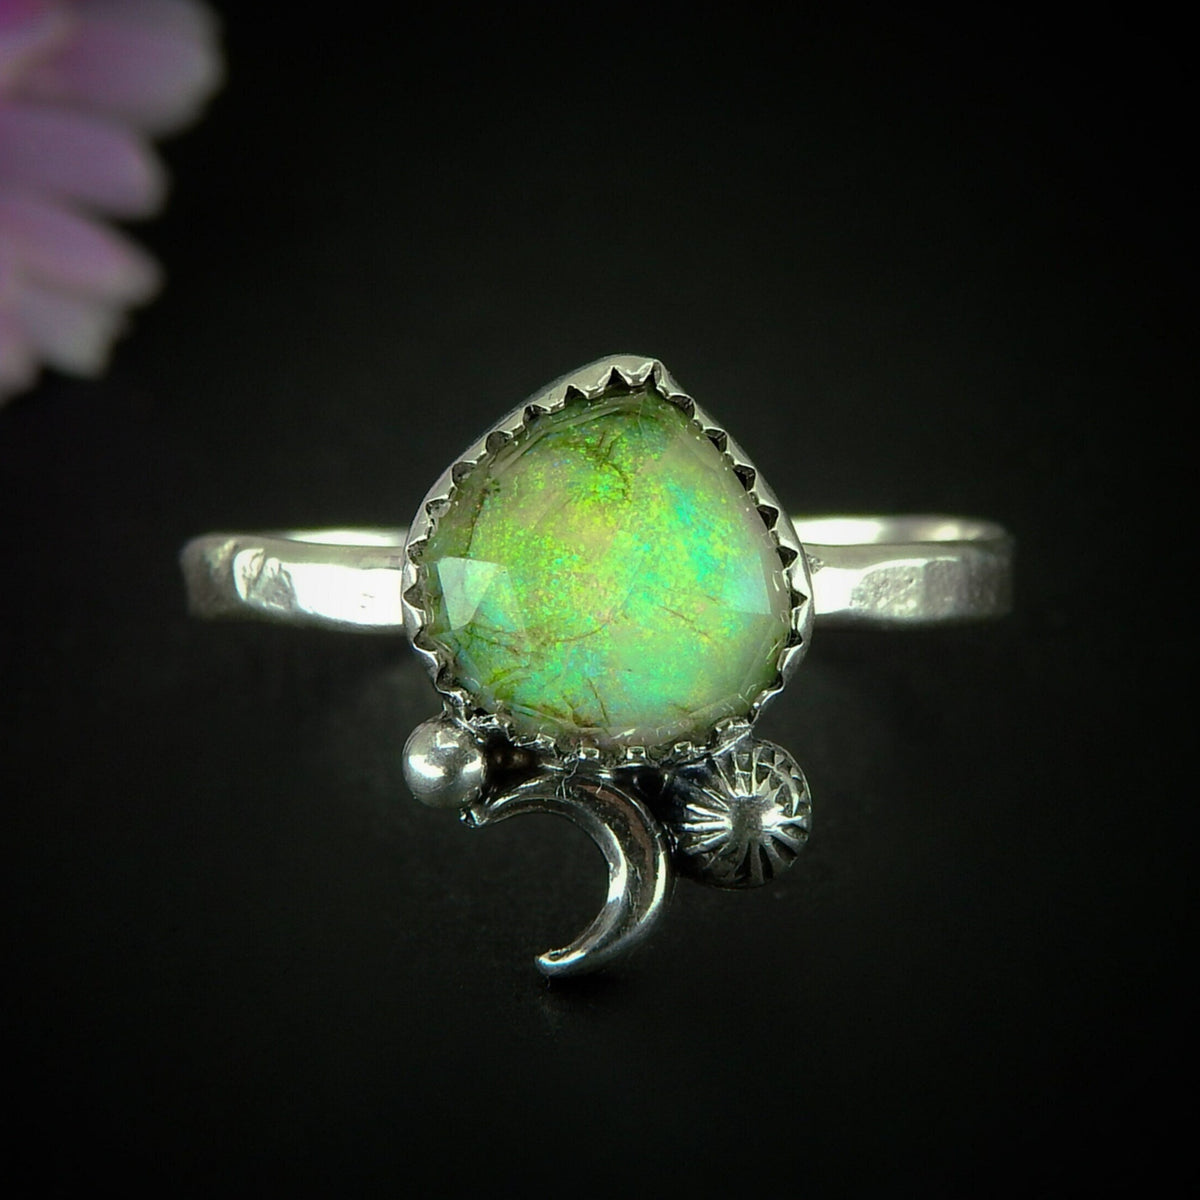 Rose Cut Clear Quartz & Monarch Opal Ring - Size 13 1/2 - Sterling Silver - Rainbow Opal Jewellery - Sterling Opal Crescent Moon Ring - OOAK